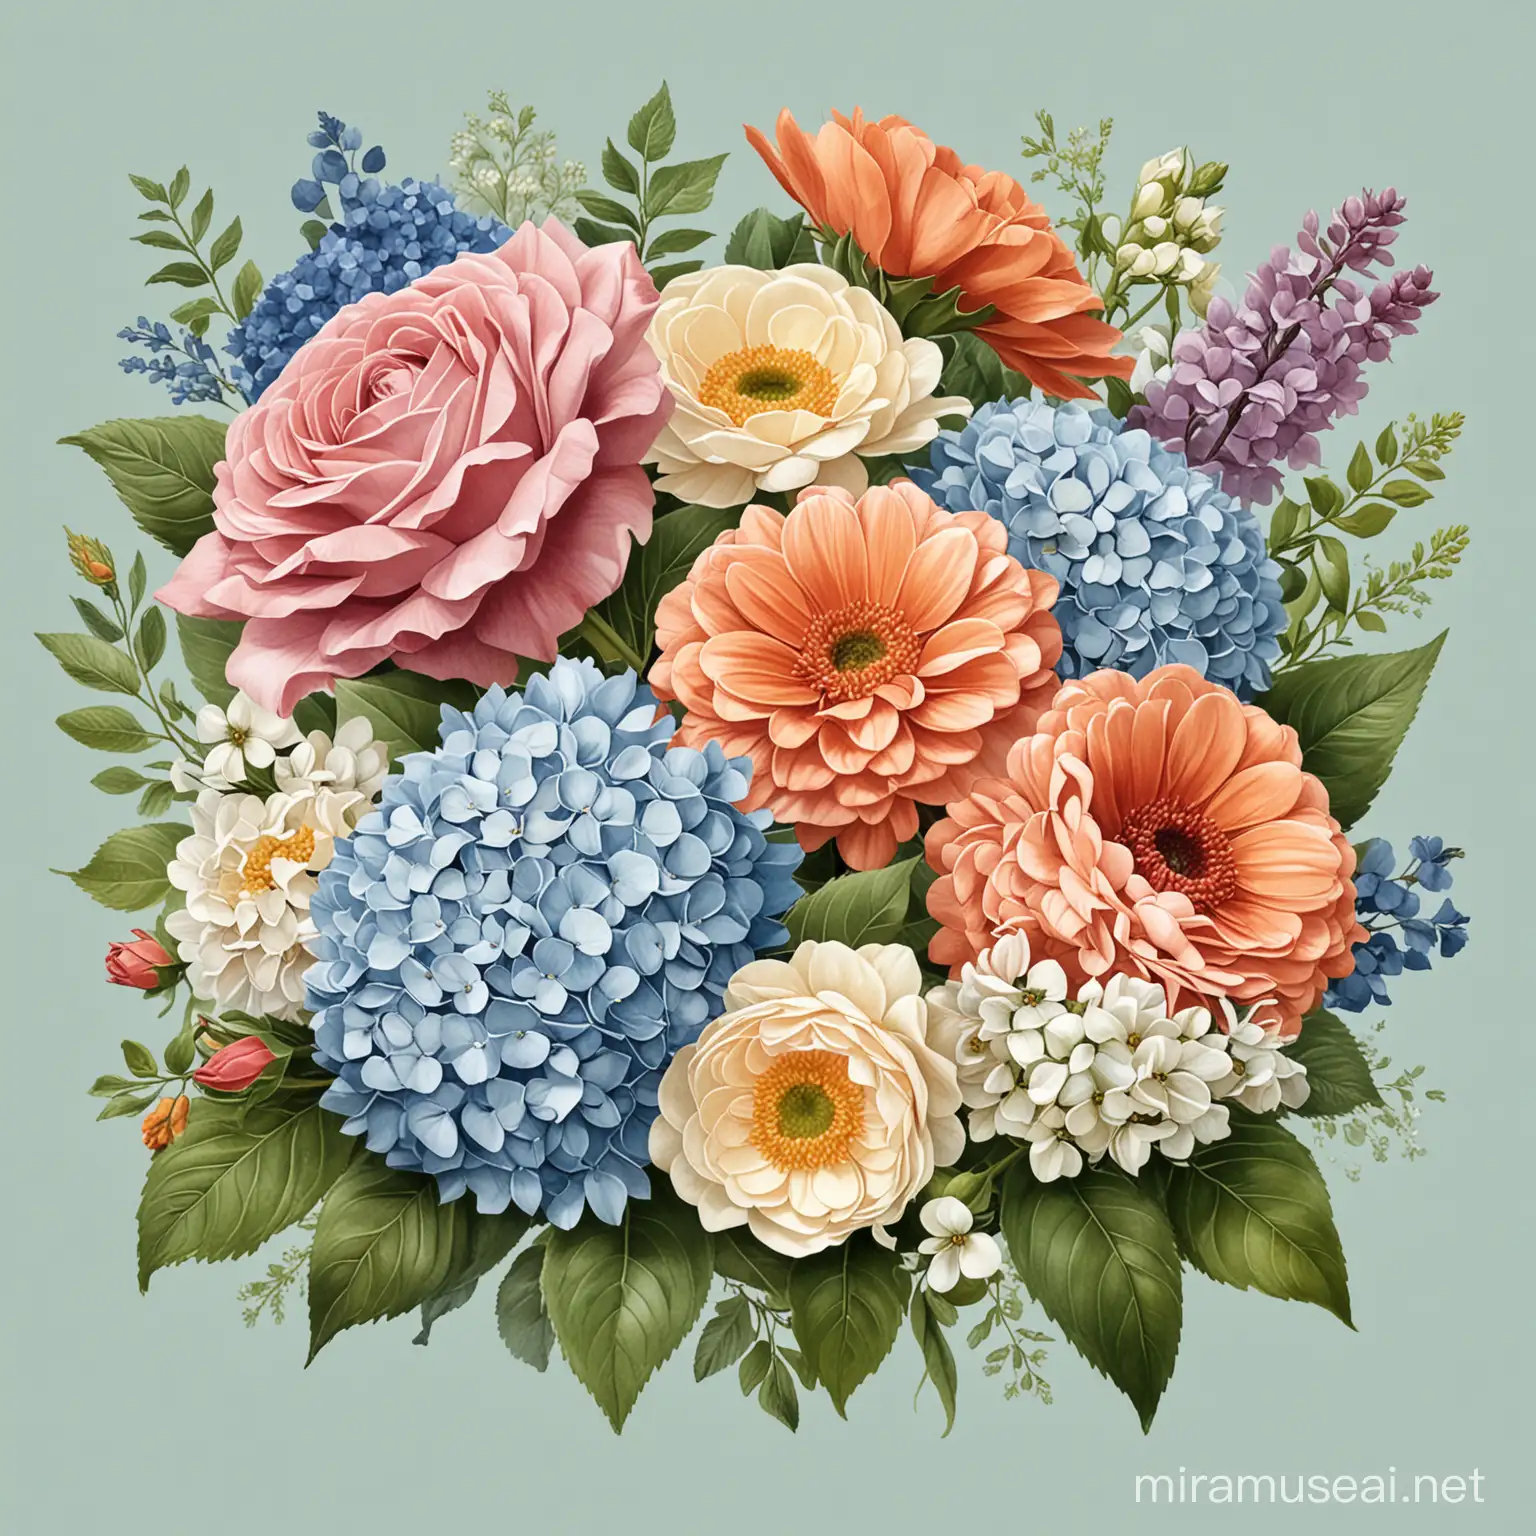 Colorful Spring Floral Arrangements Roses Hydrangeas Astros and Gerberas Illustration